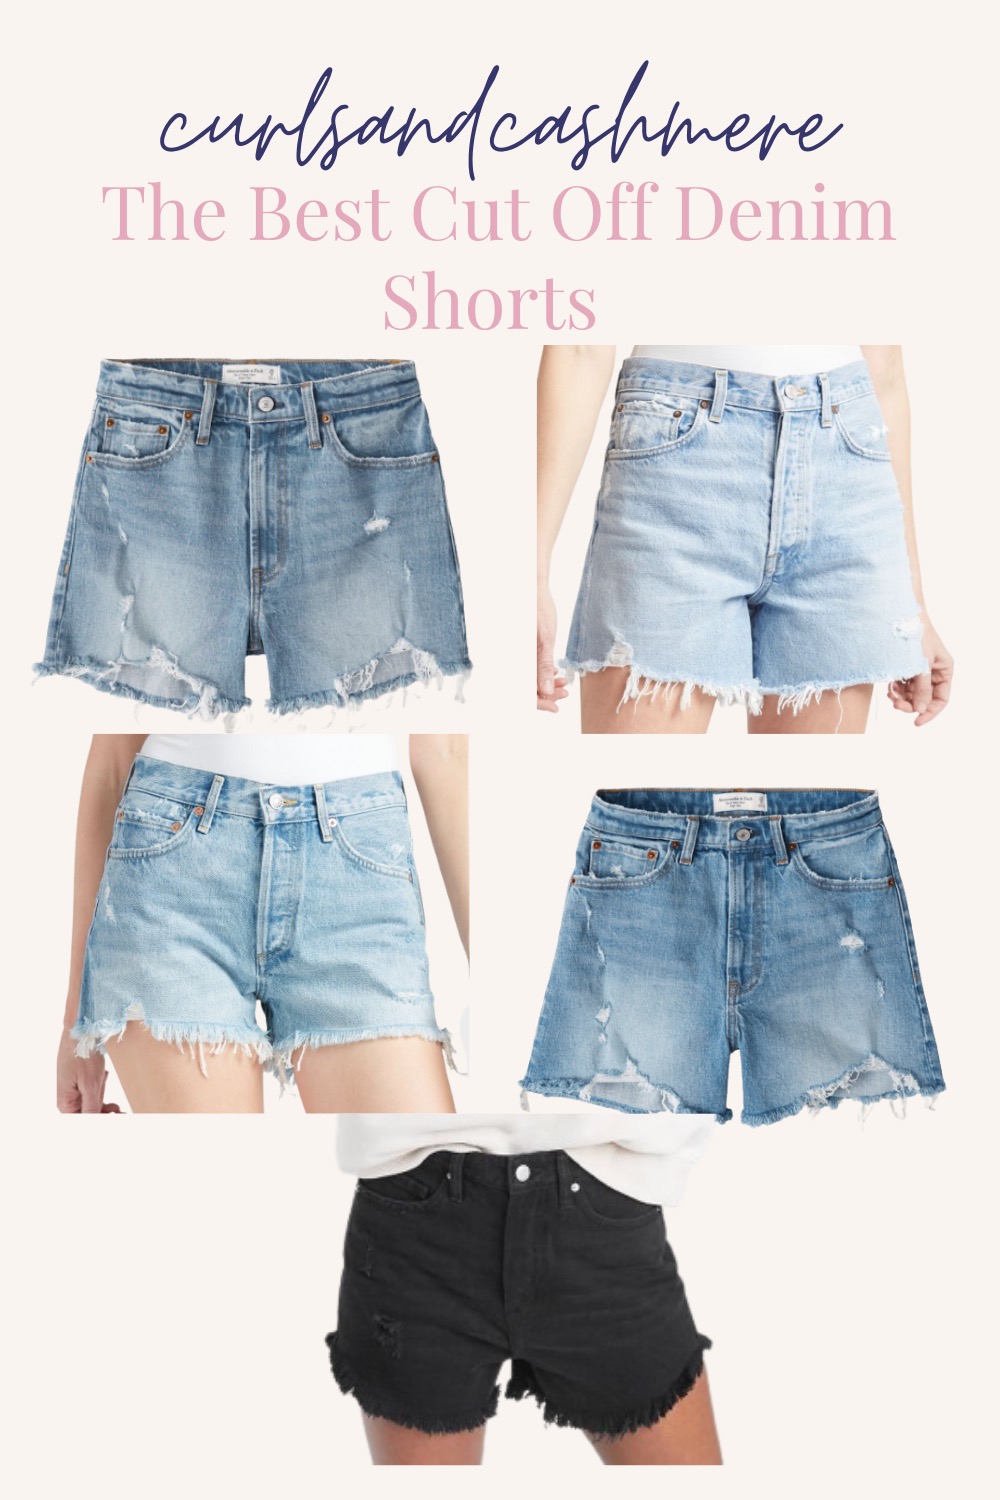 The Five Best Cut Off Denim Shorts